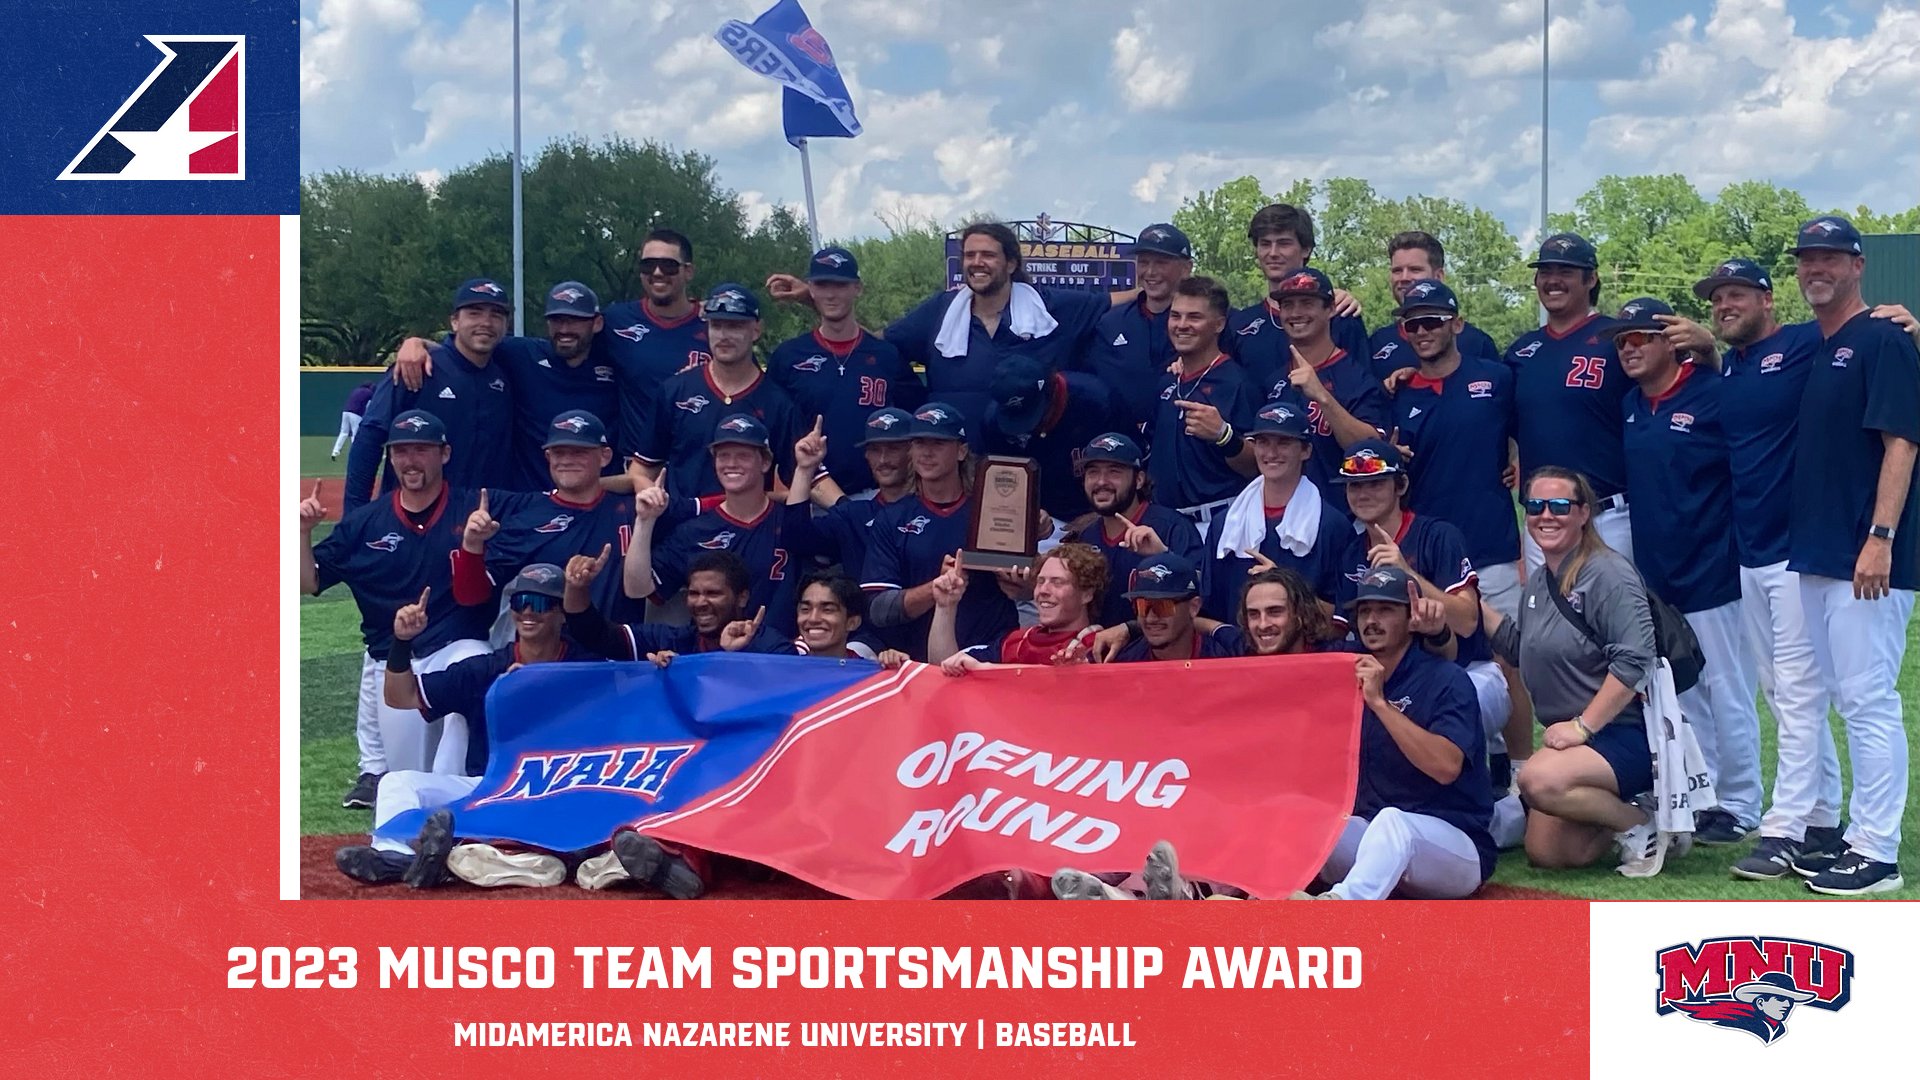 MidAmerica Nazarene University Baseball Selected 2023 Musco Team Sportsmanship Award Recipient for Second Consecutive Season